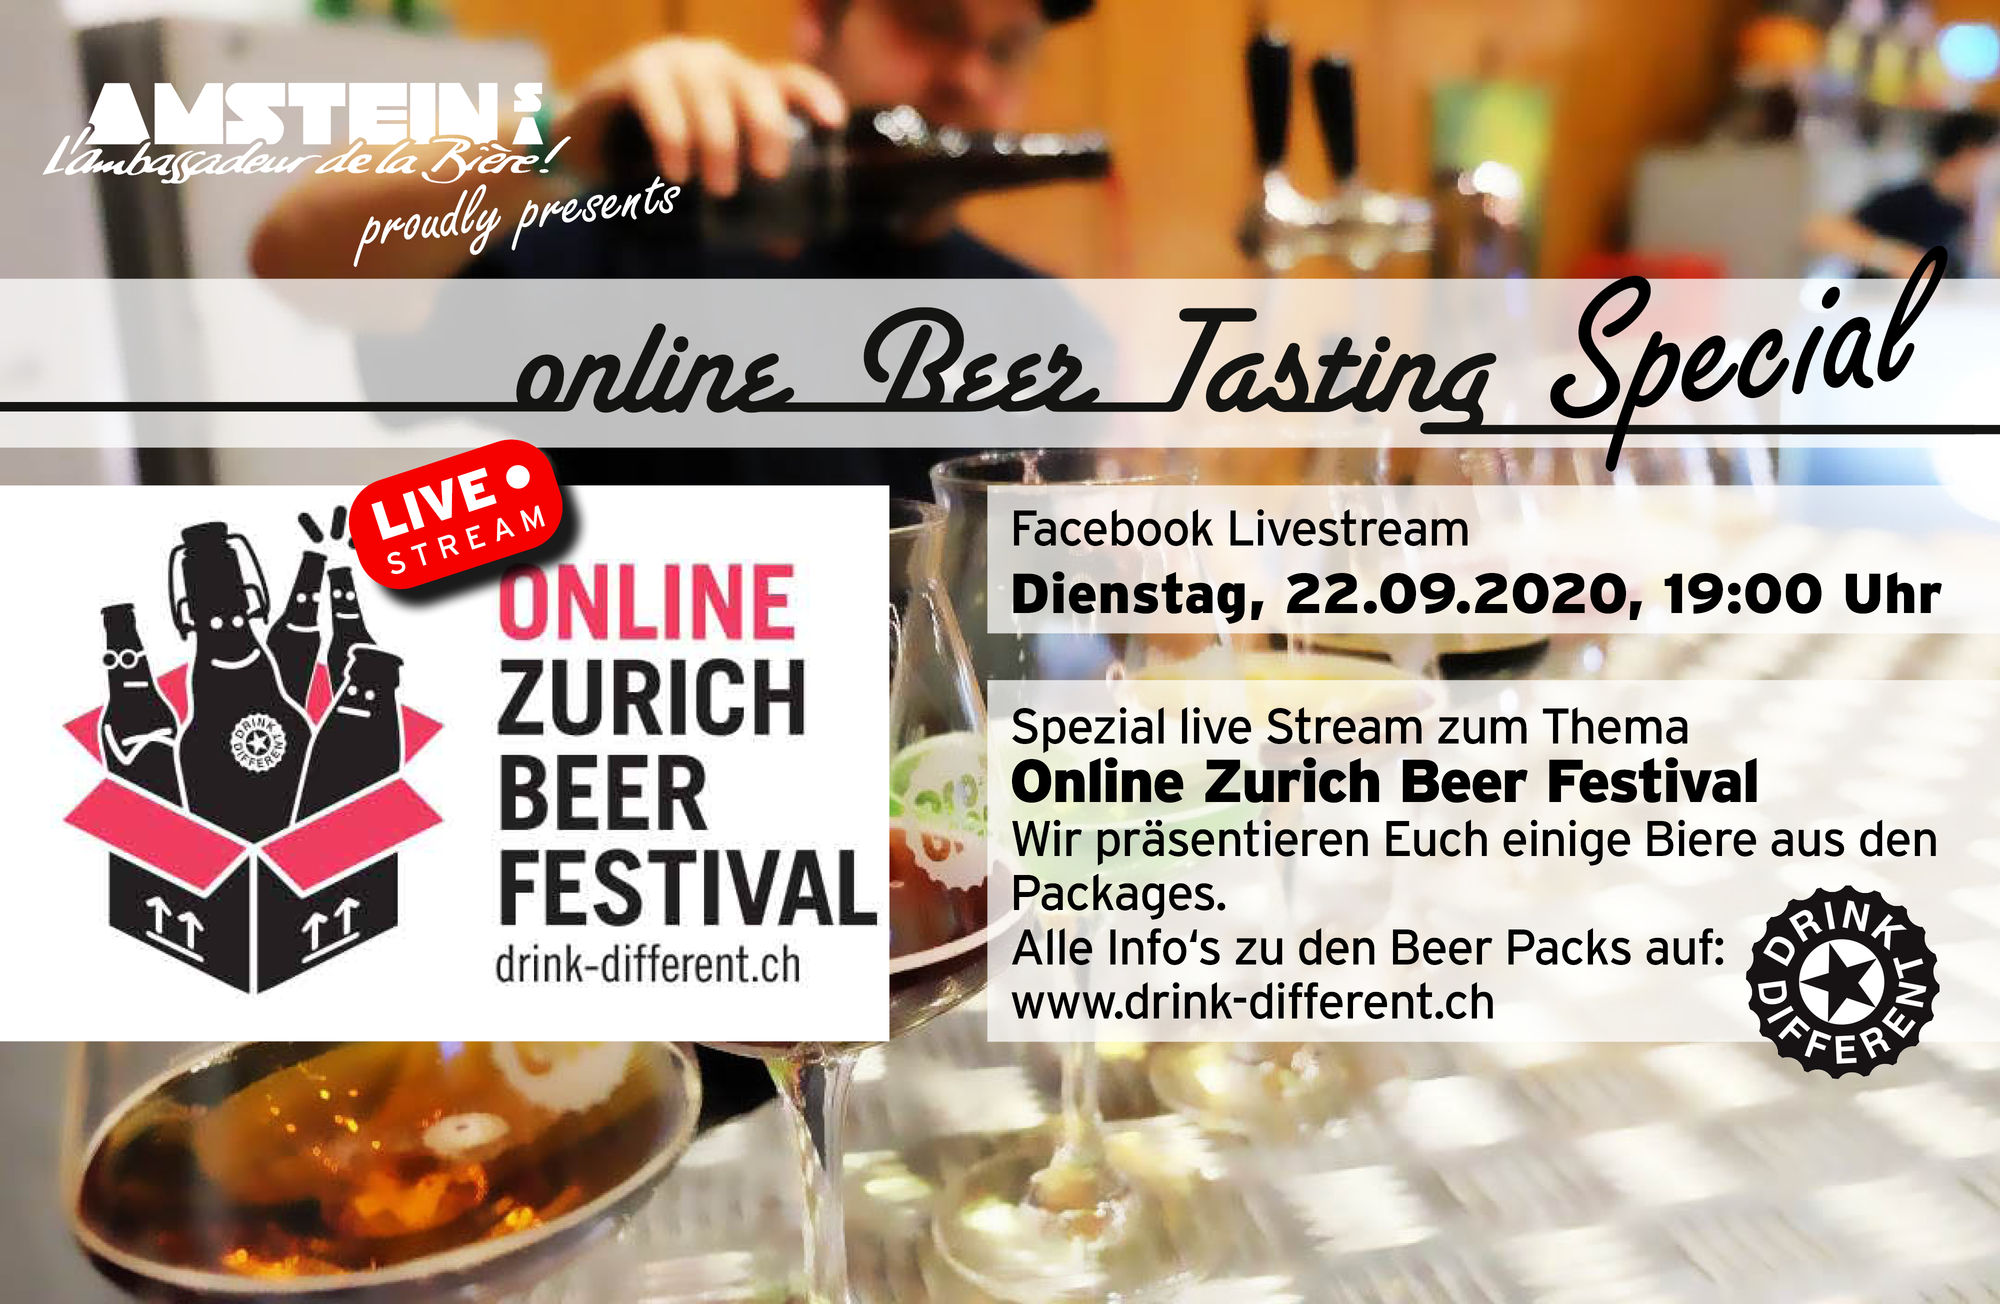 Online Beer Tasting Special Edition for ONLINE ZURICH BEER FESTIVAL